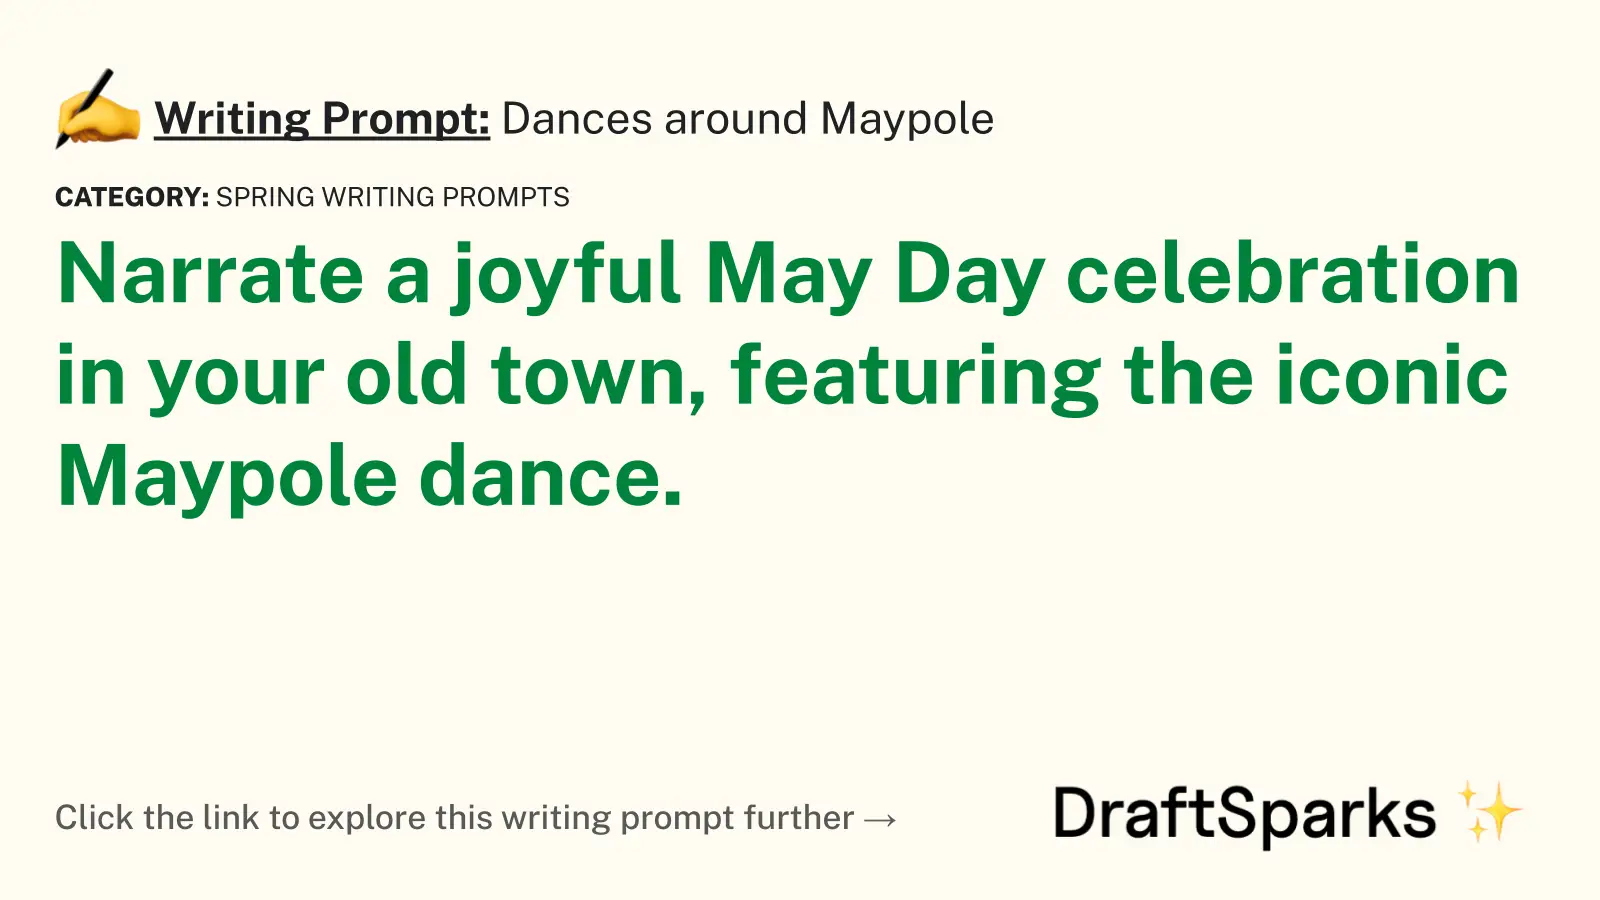 Dances around Maypole